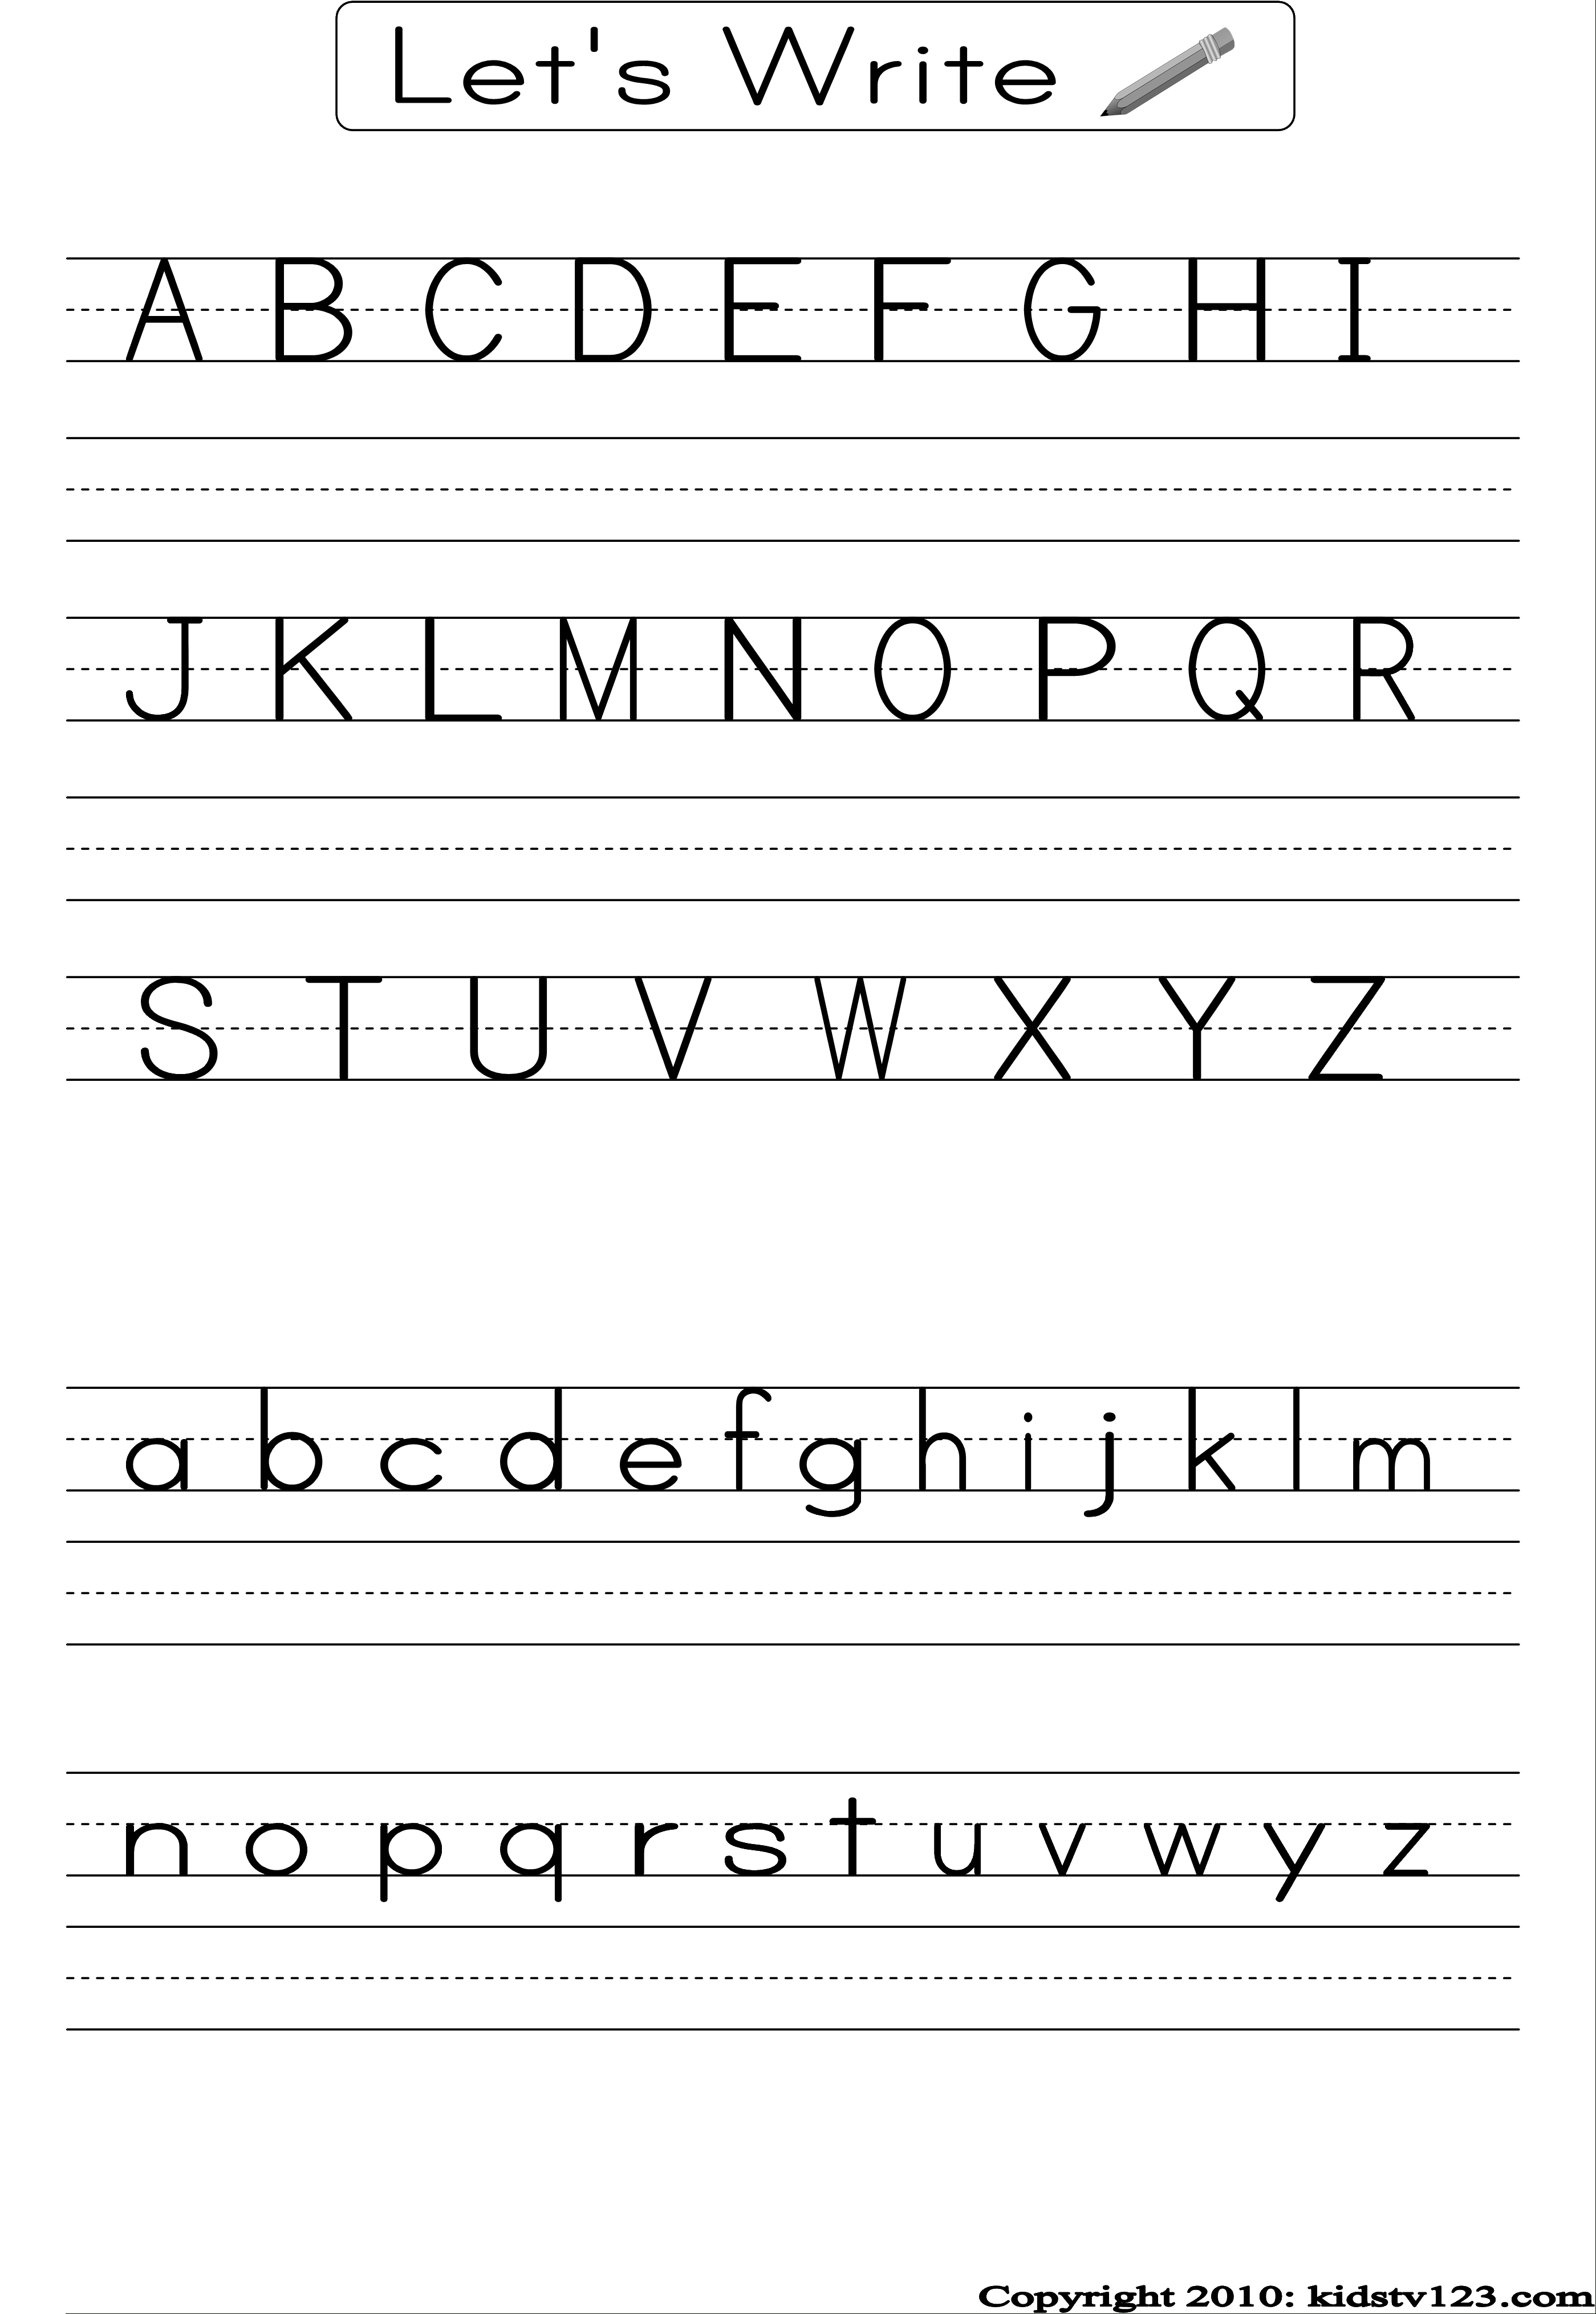 Free Printable Alphabet Worksheets, Preschool Writing And Pattern - Free Printable Alphabet Worksheets